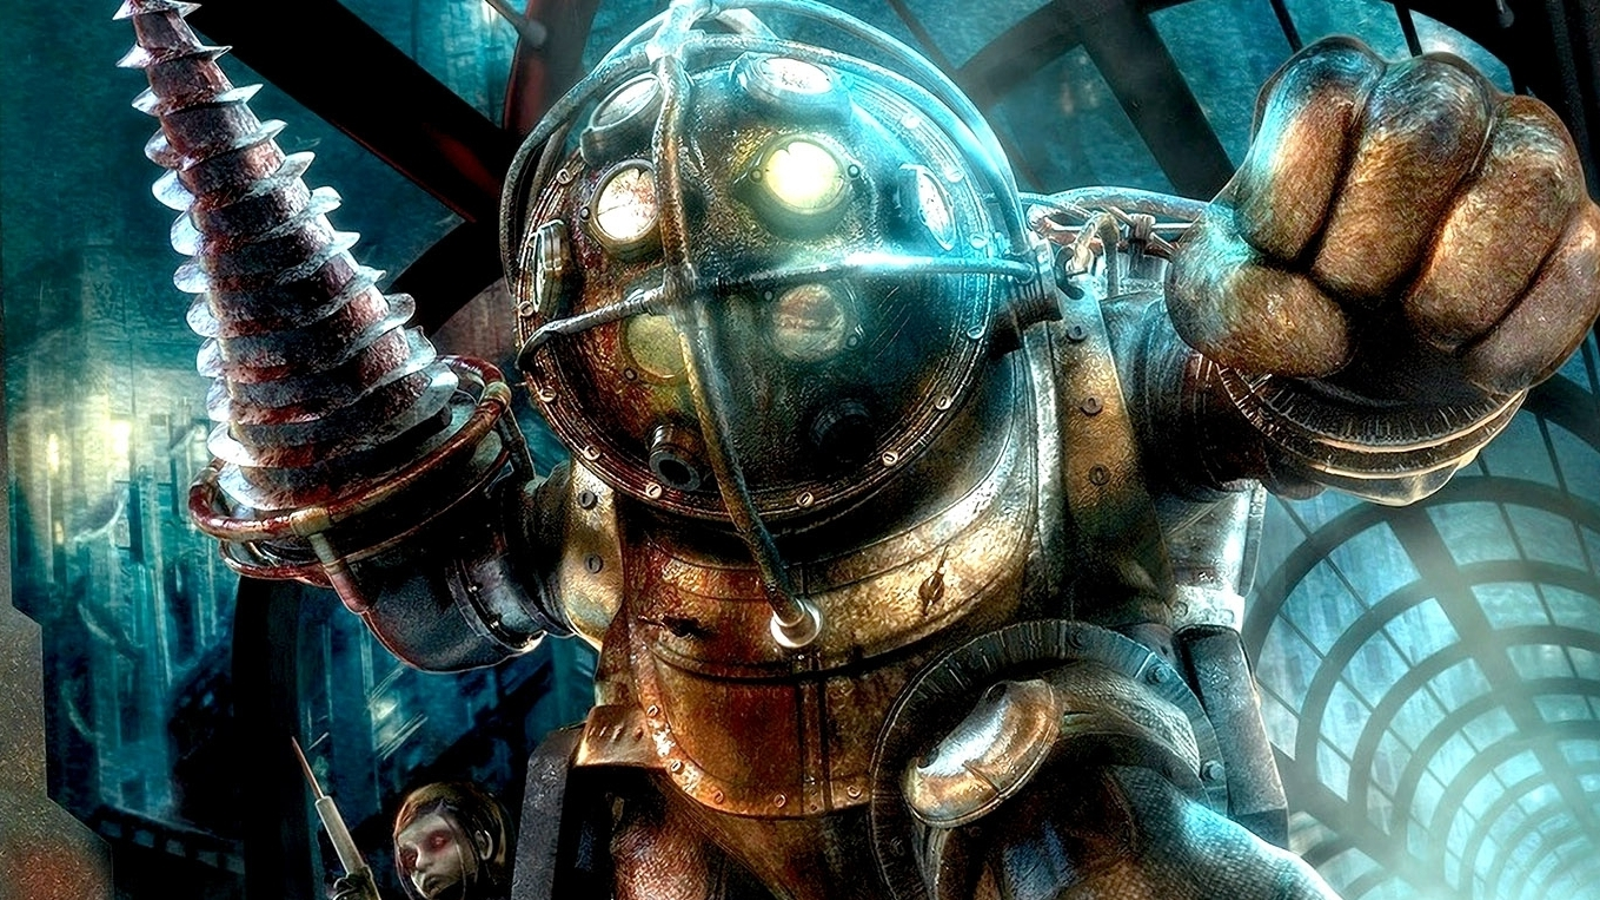 This Xbox Series X exclusive looks like the Bioshock Infinite